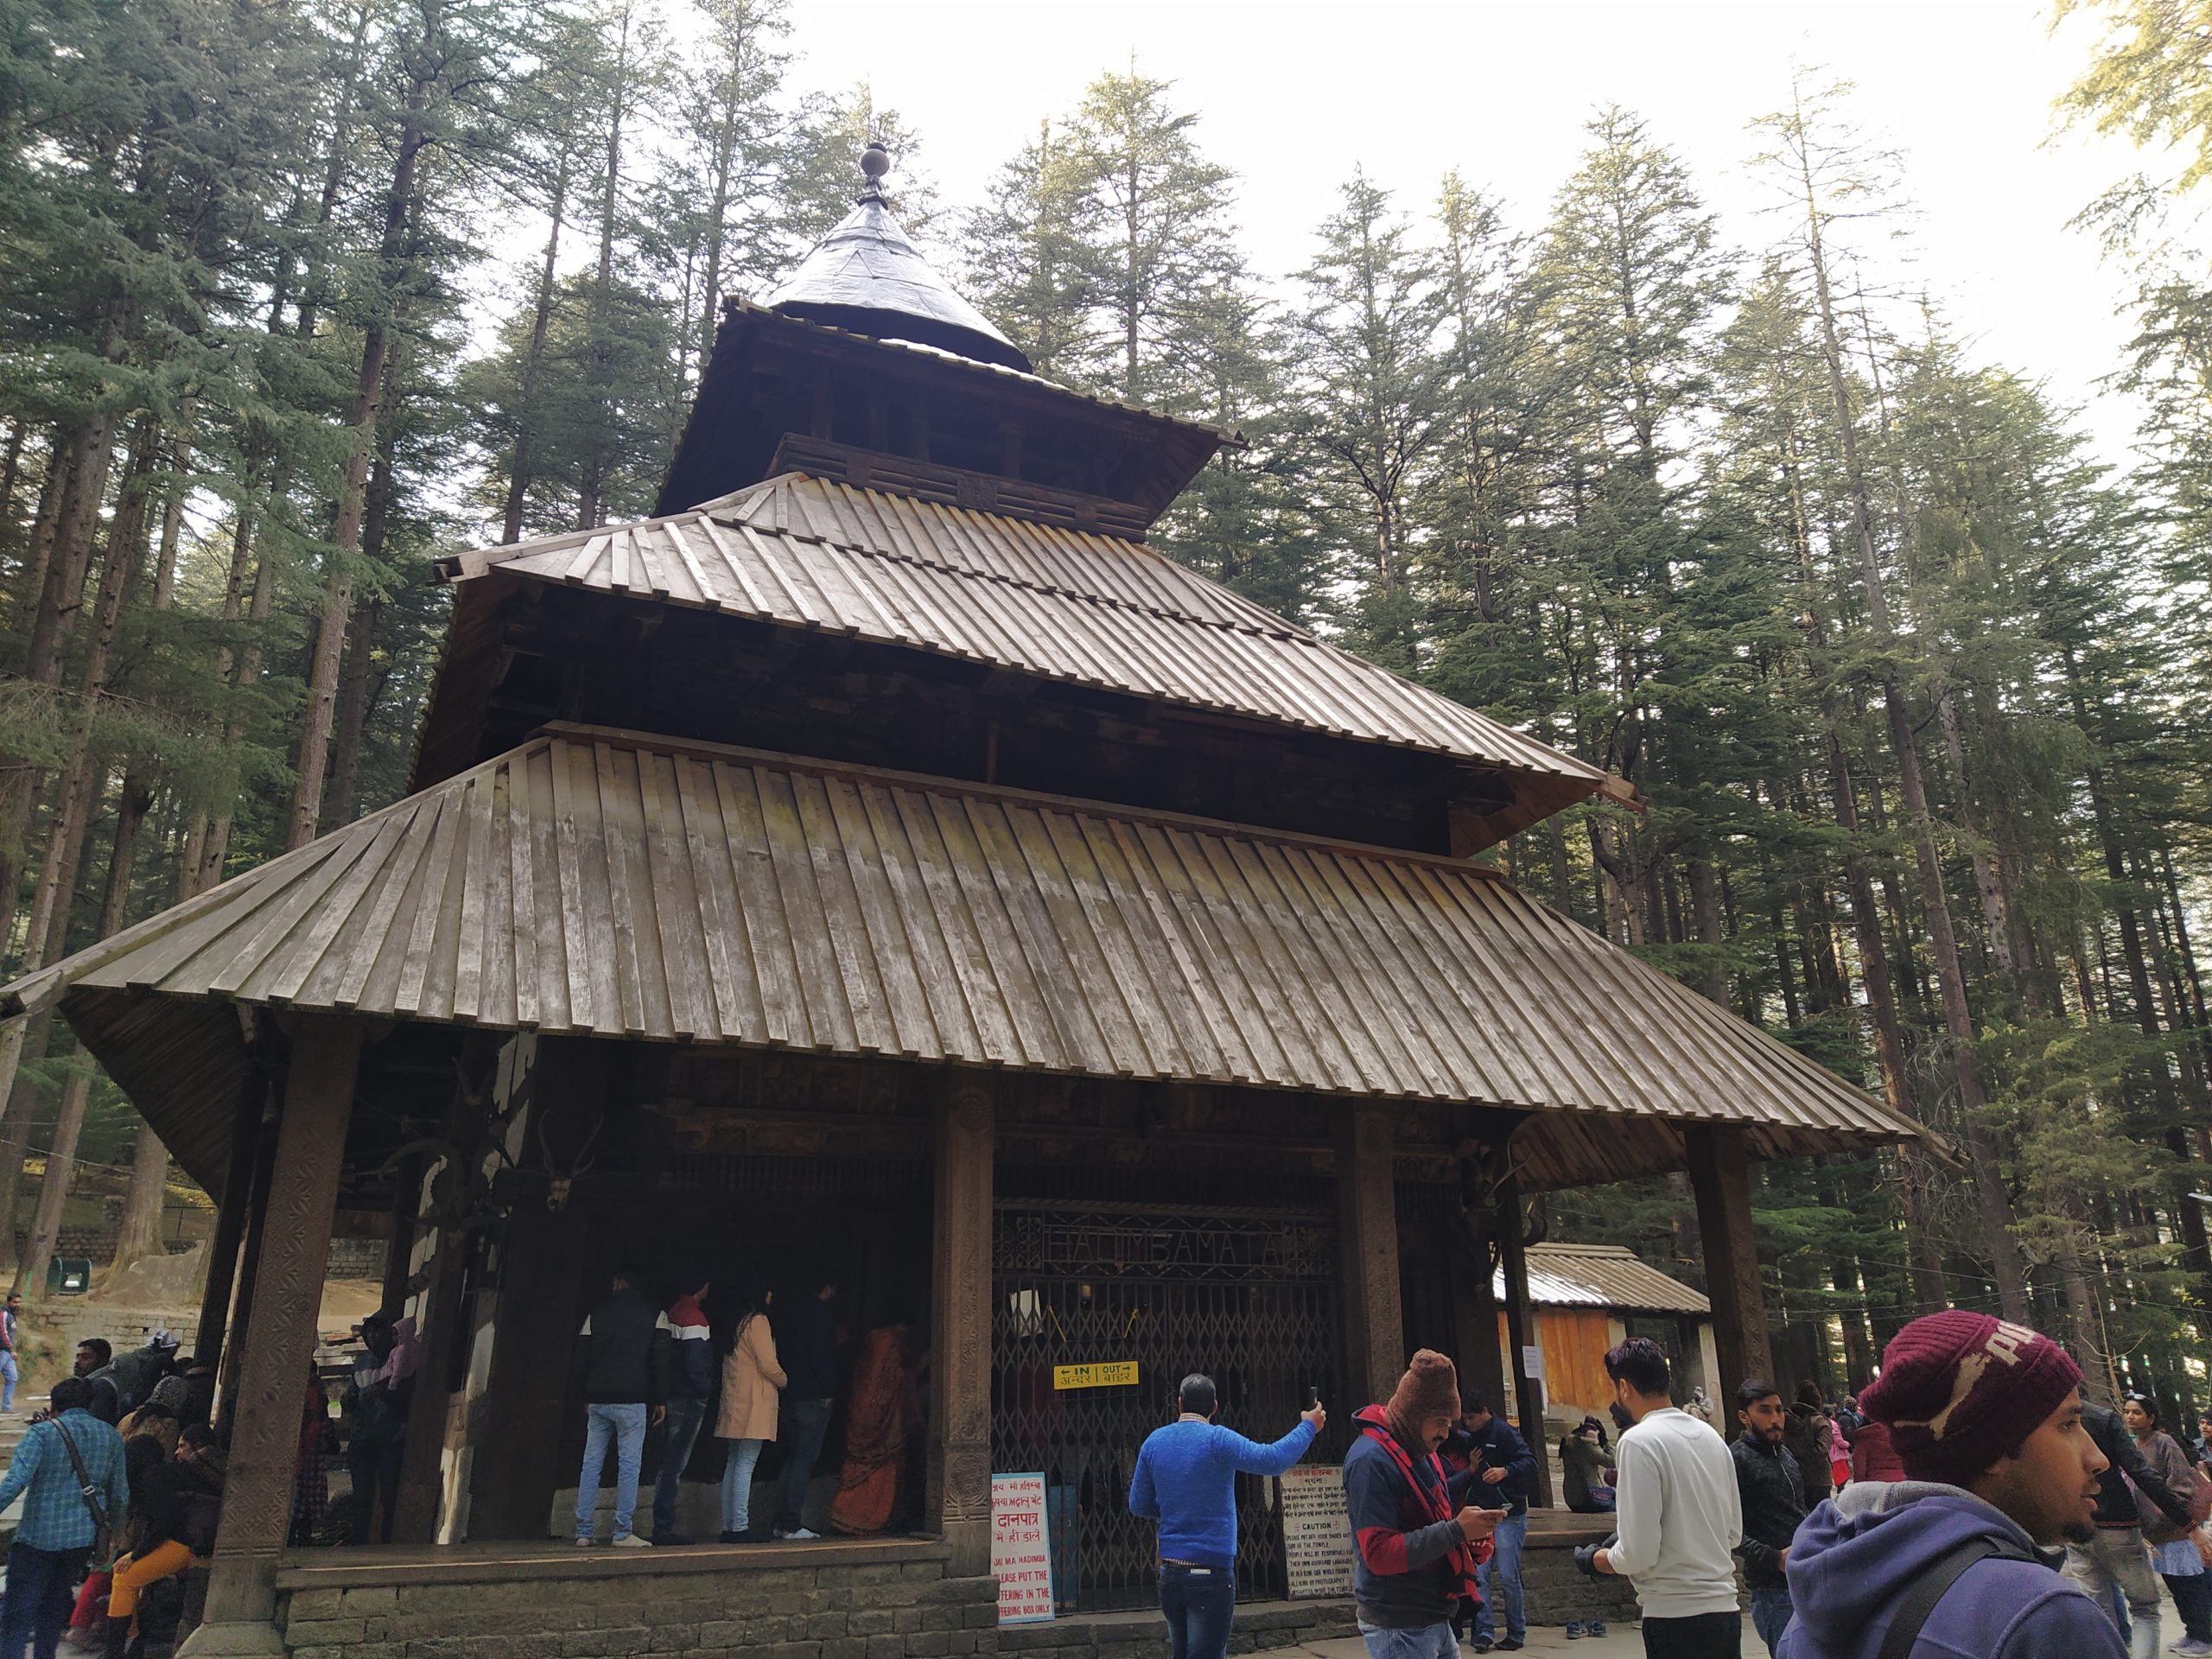 hidimba temple